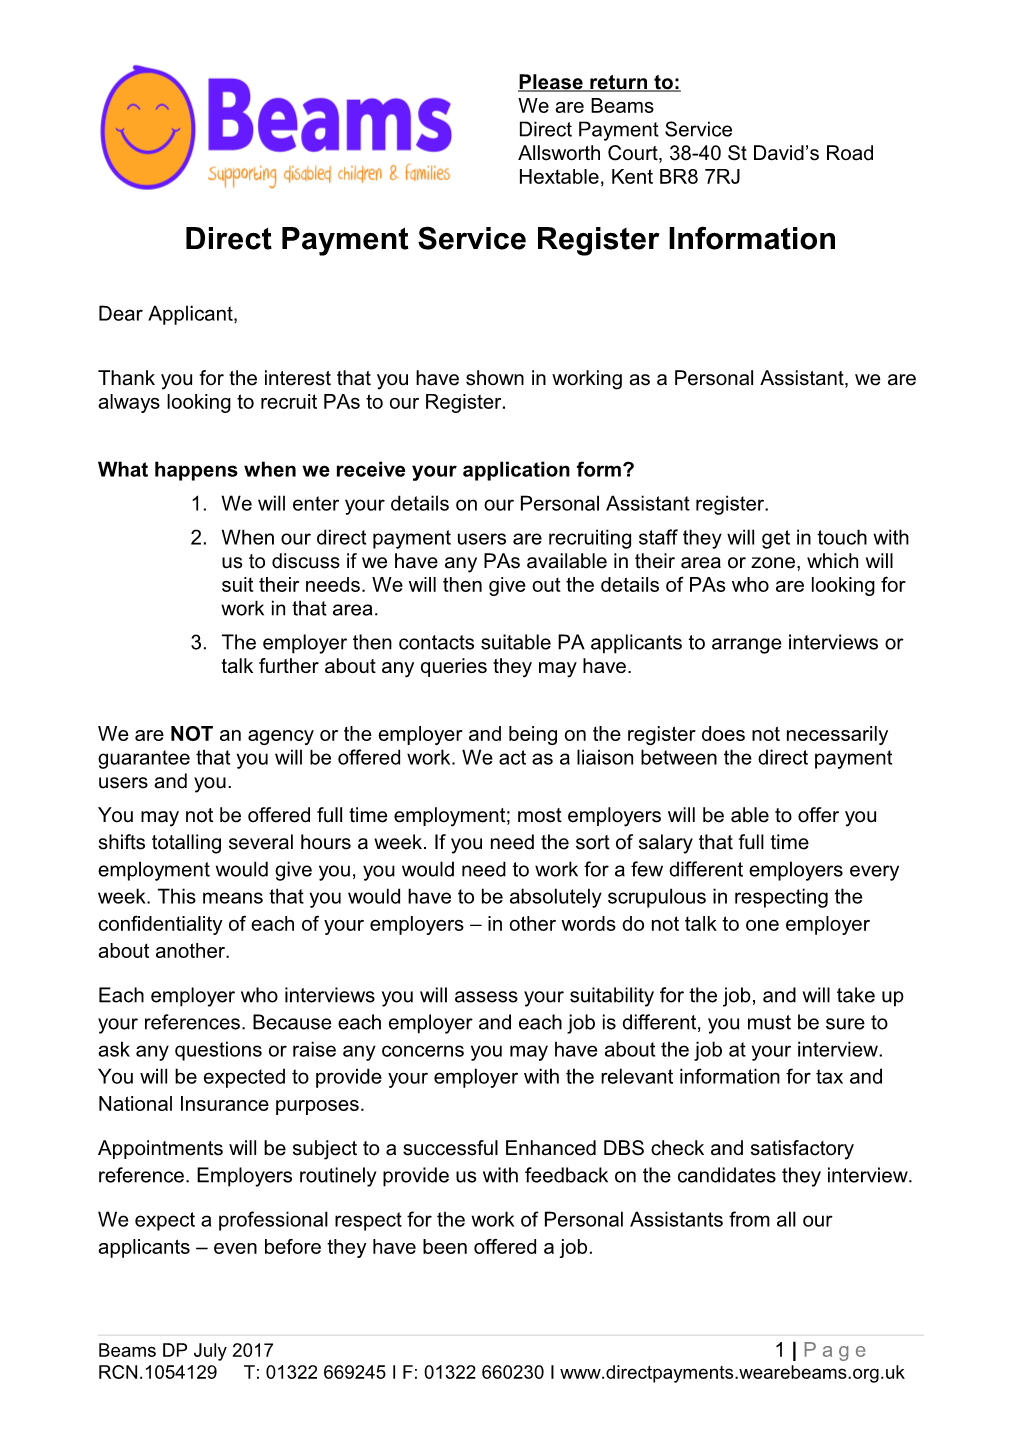 Direct Payment Service Register Information